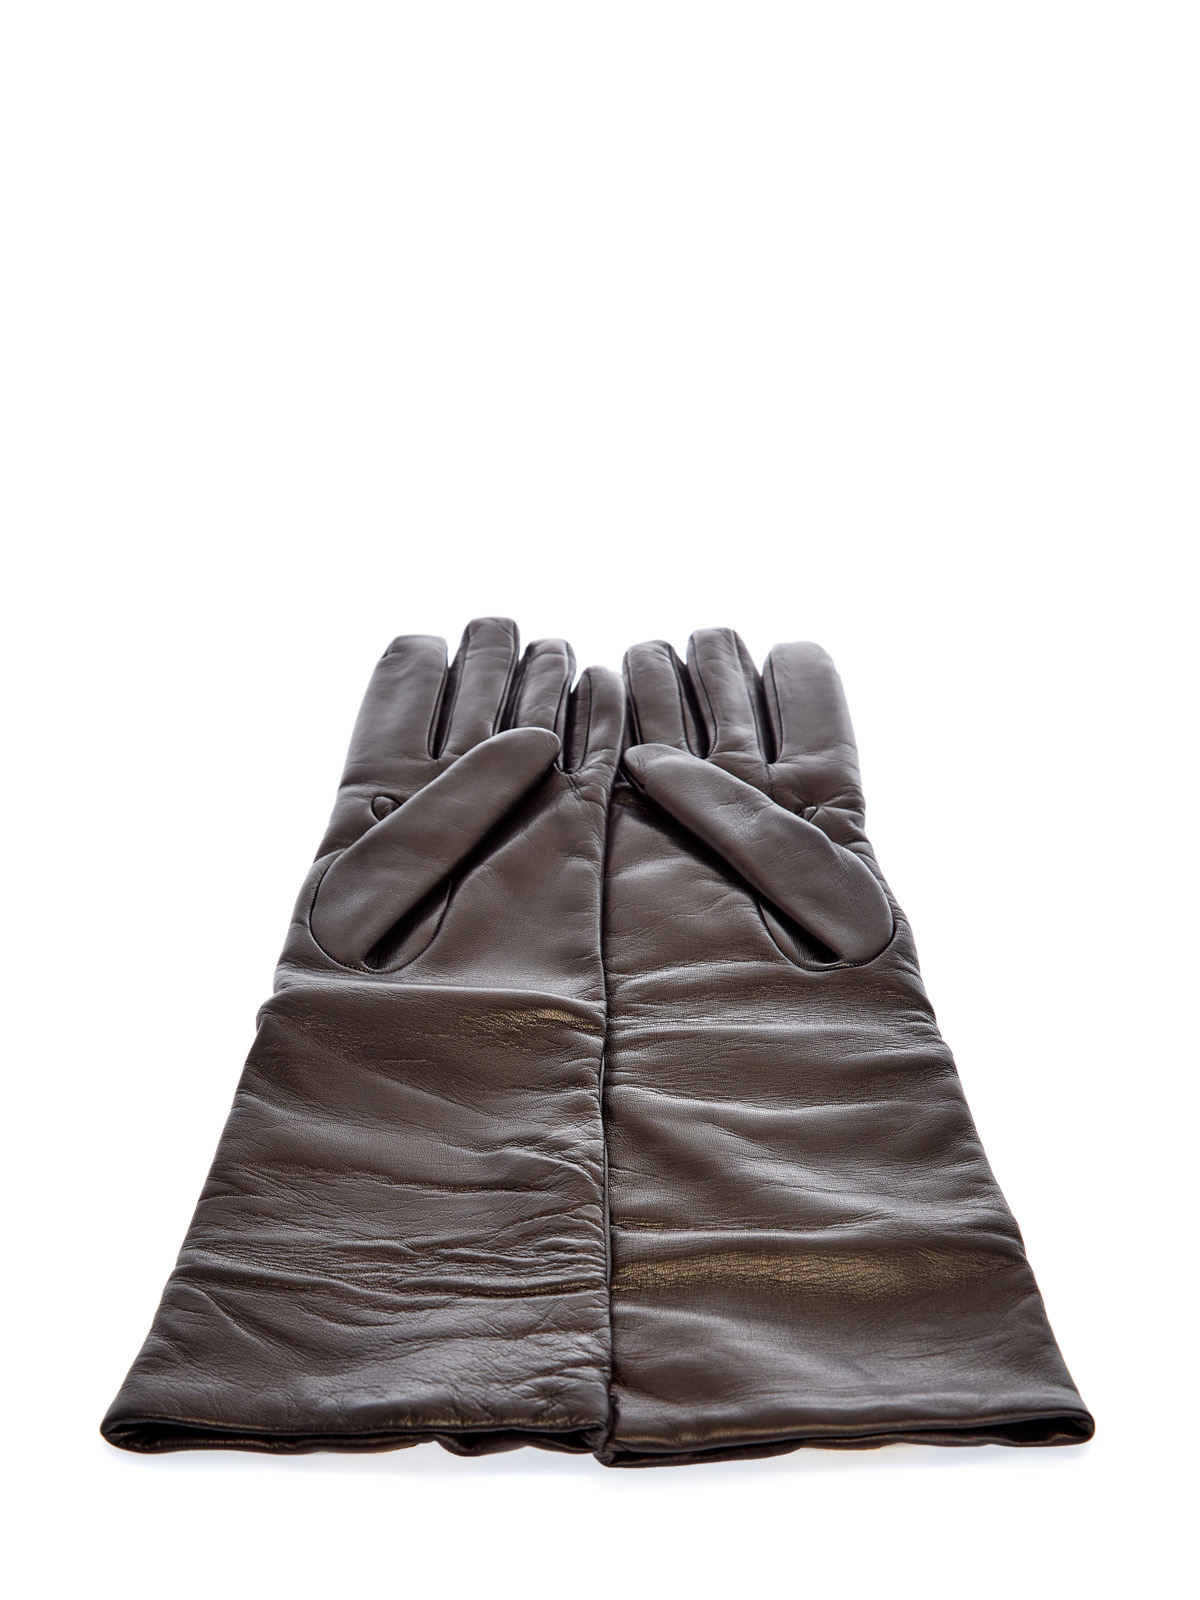 Перчатки Roman Stud из гладкой кожи наппа VALENTINO GARAVANI, цвет коричневый, размер XS;M;L - фото 3